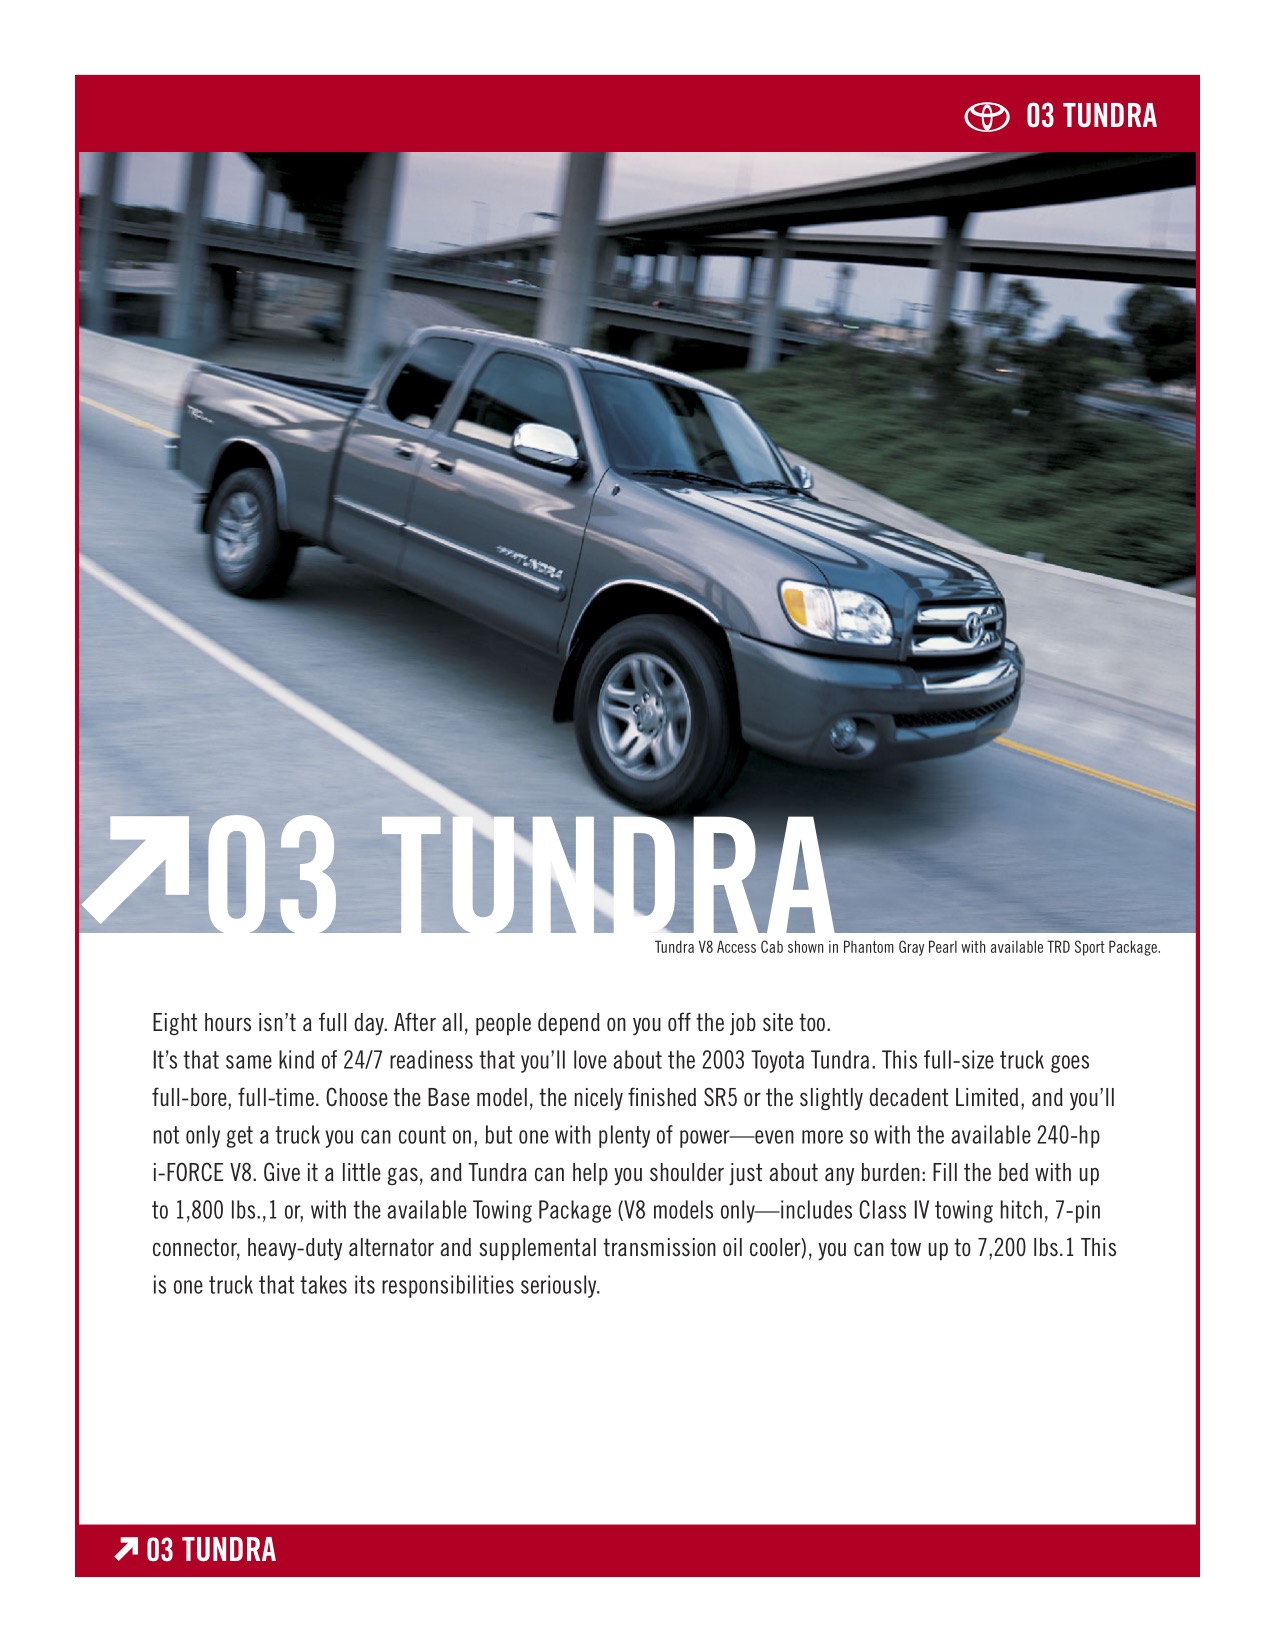 2003 Toyota Tundra Brochure